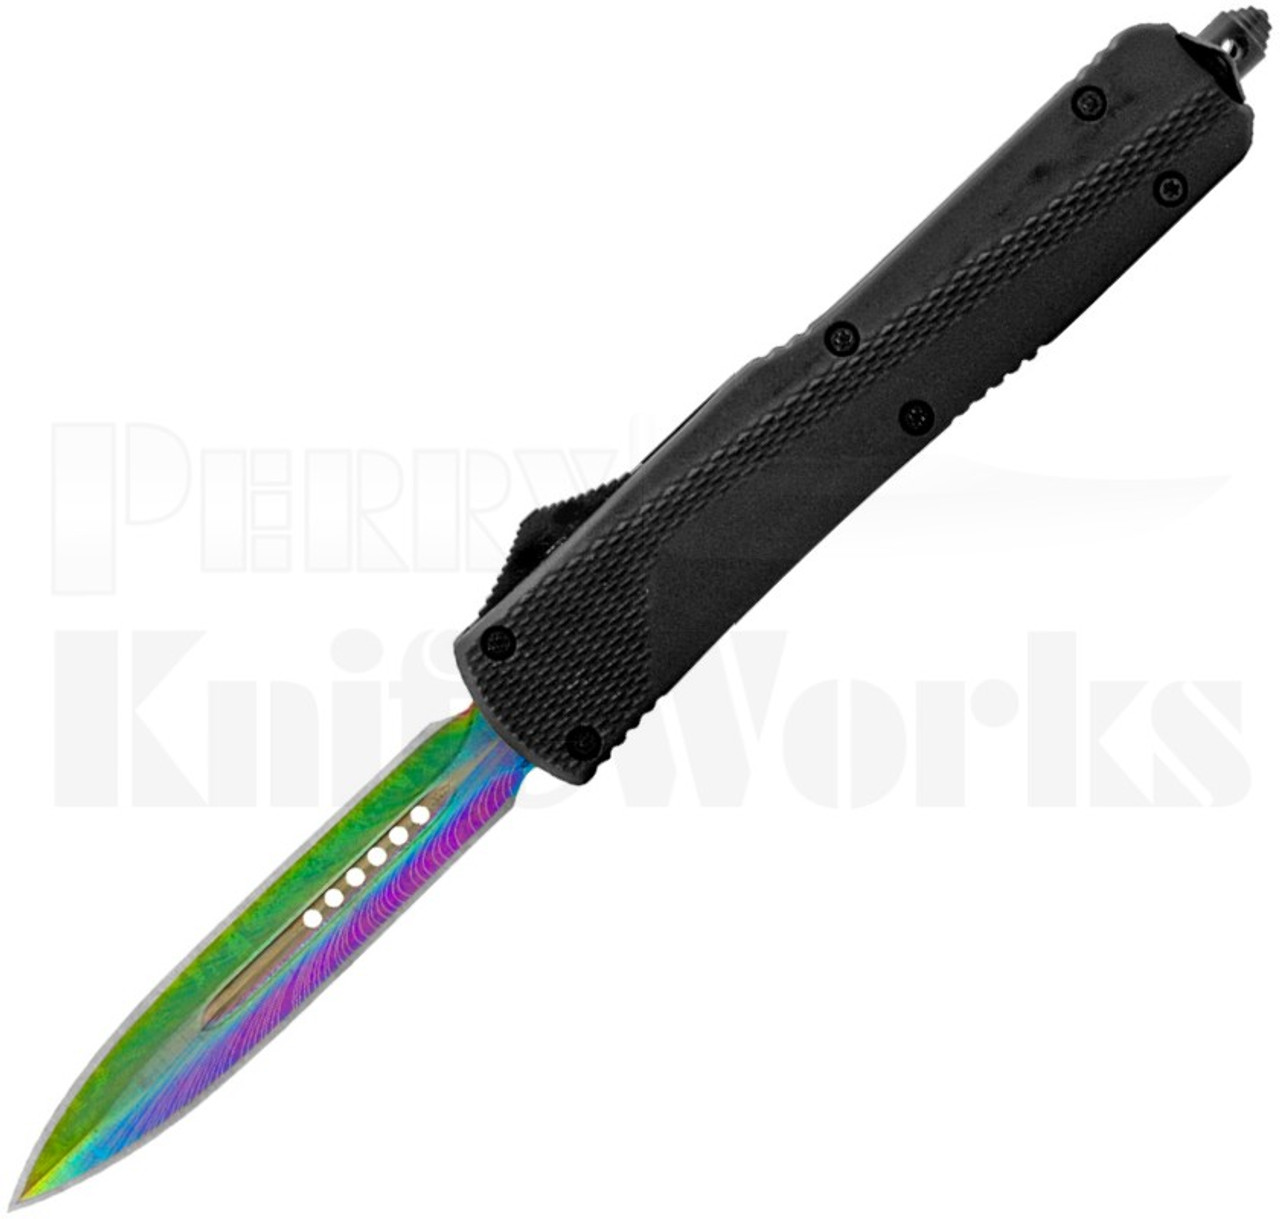 Delta Force Tactical Grip D/A OTF Automatic Knife Black l Spectrum l For Sale